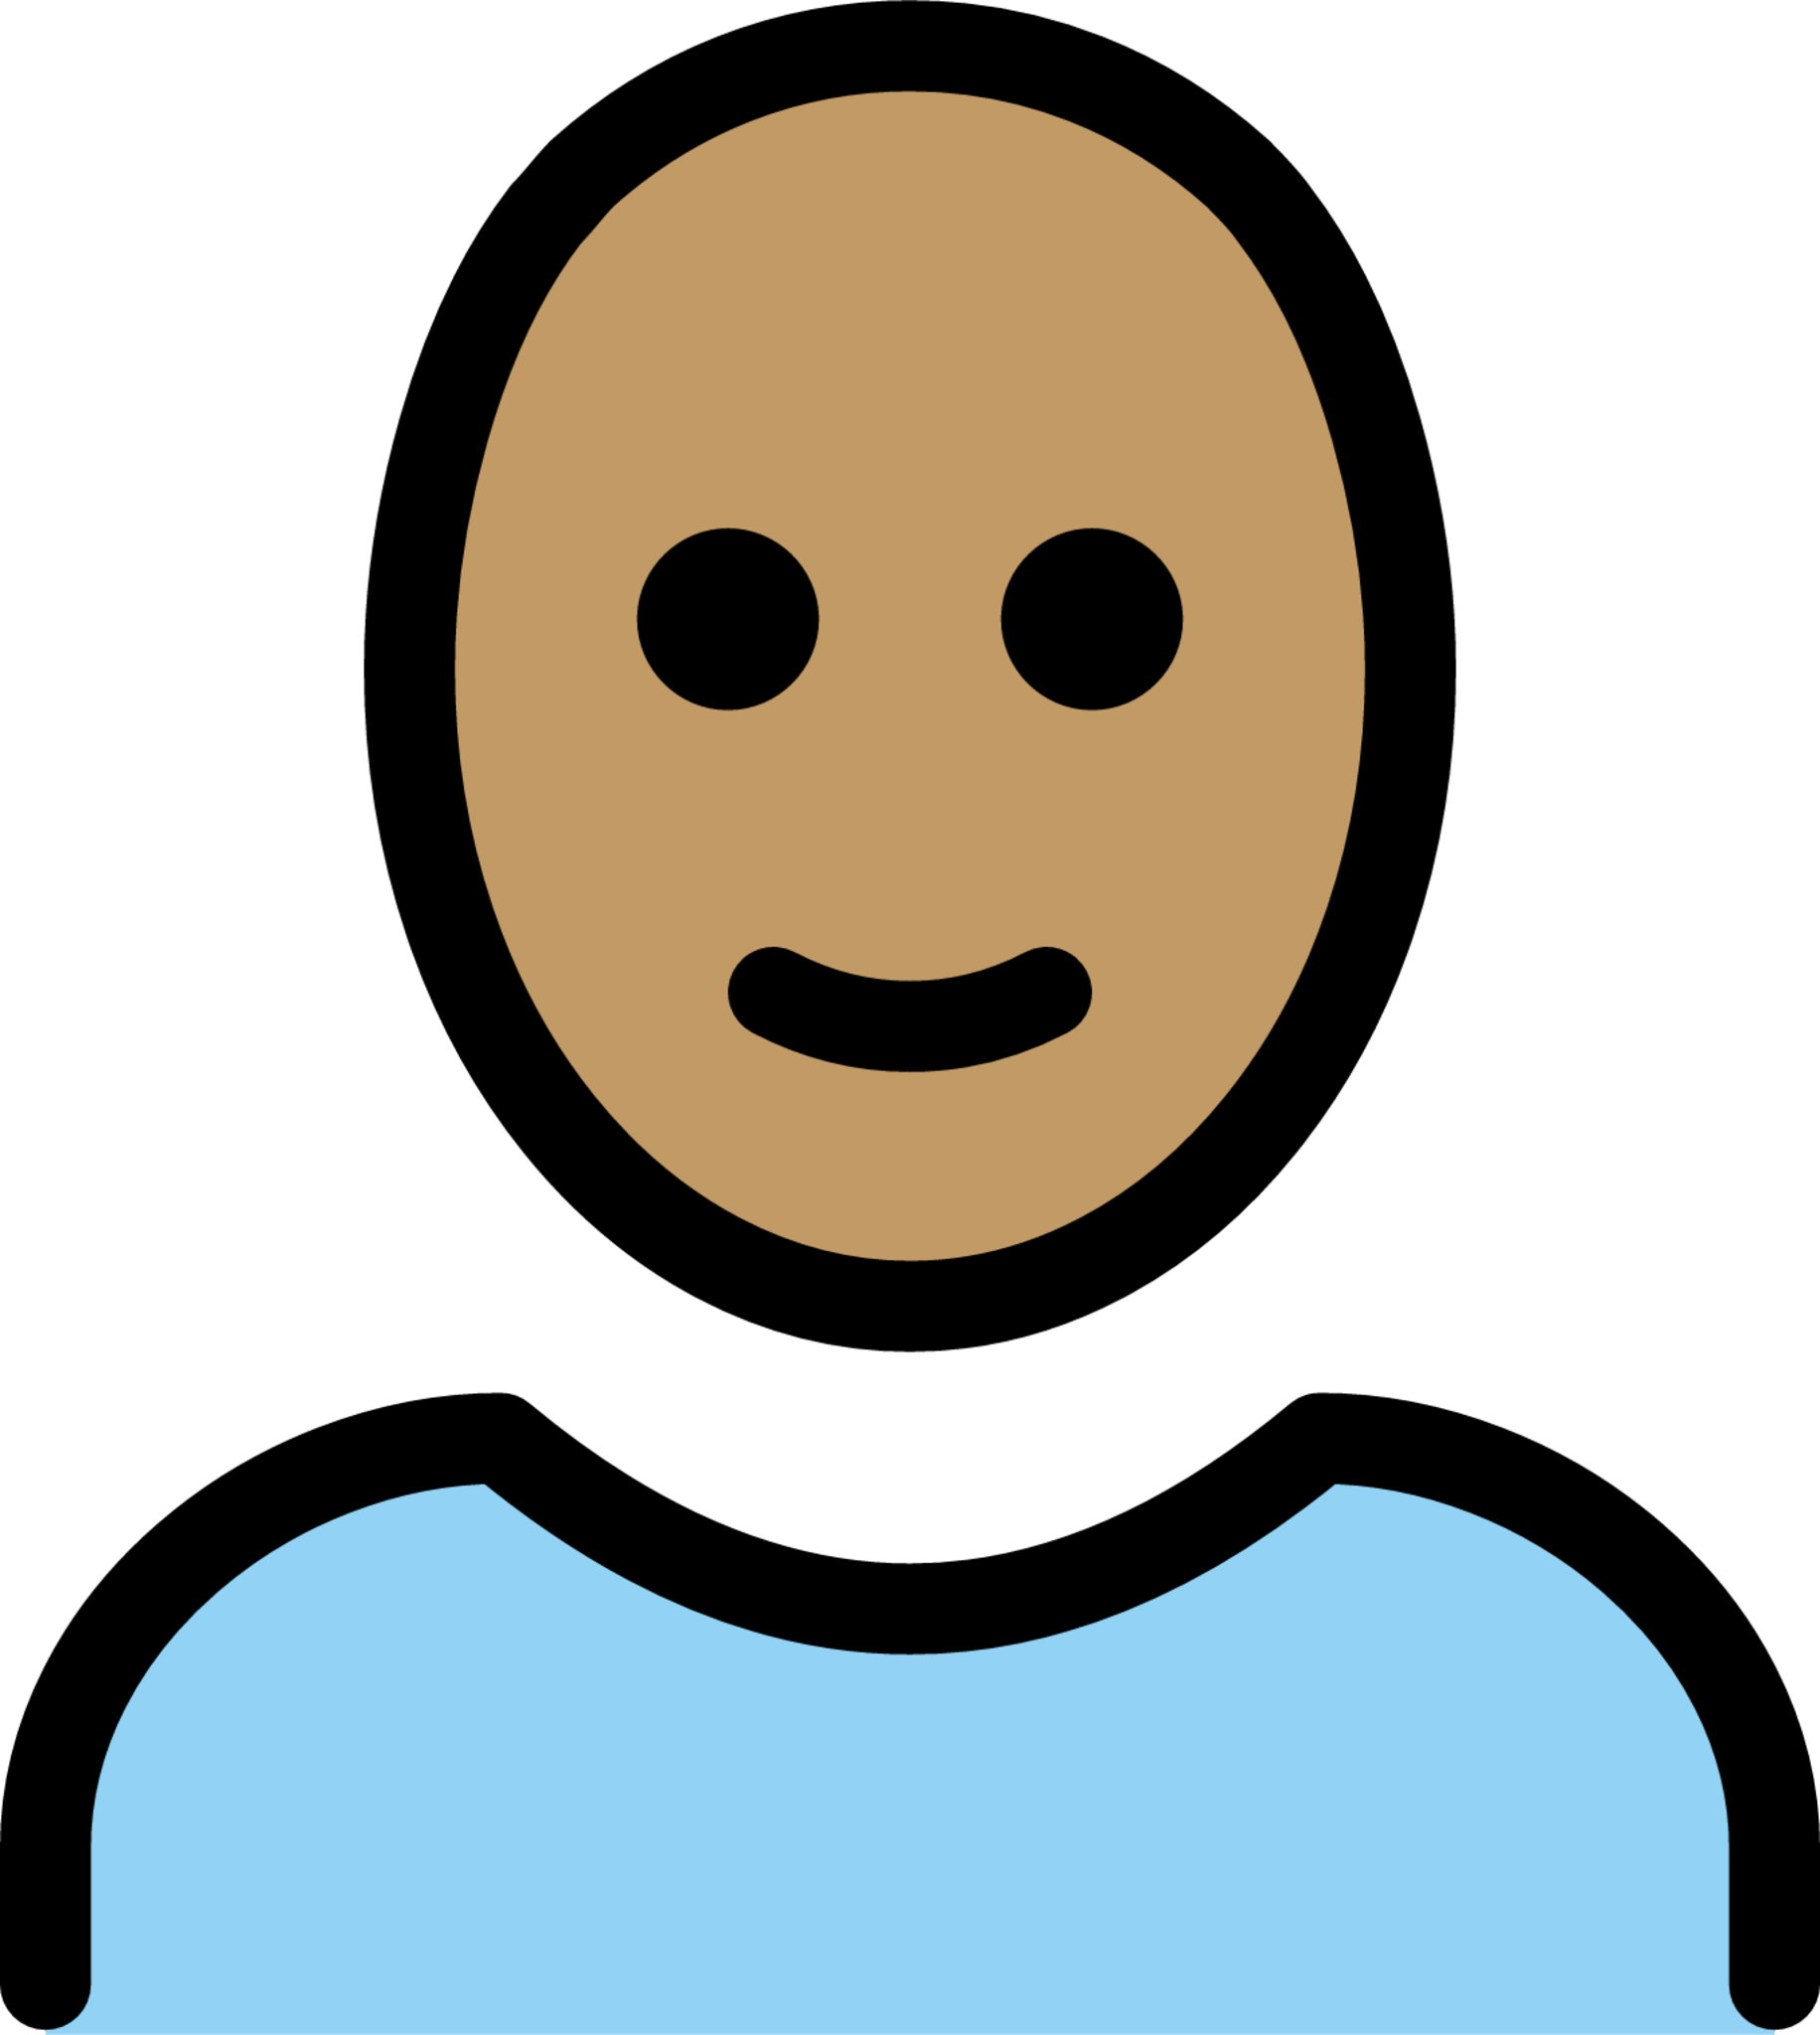 person: medium skin tone, bald emoji